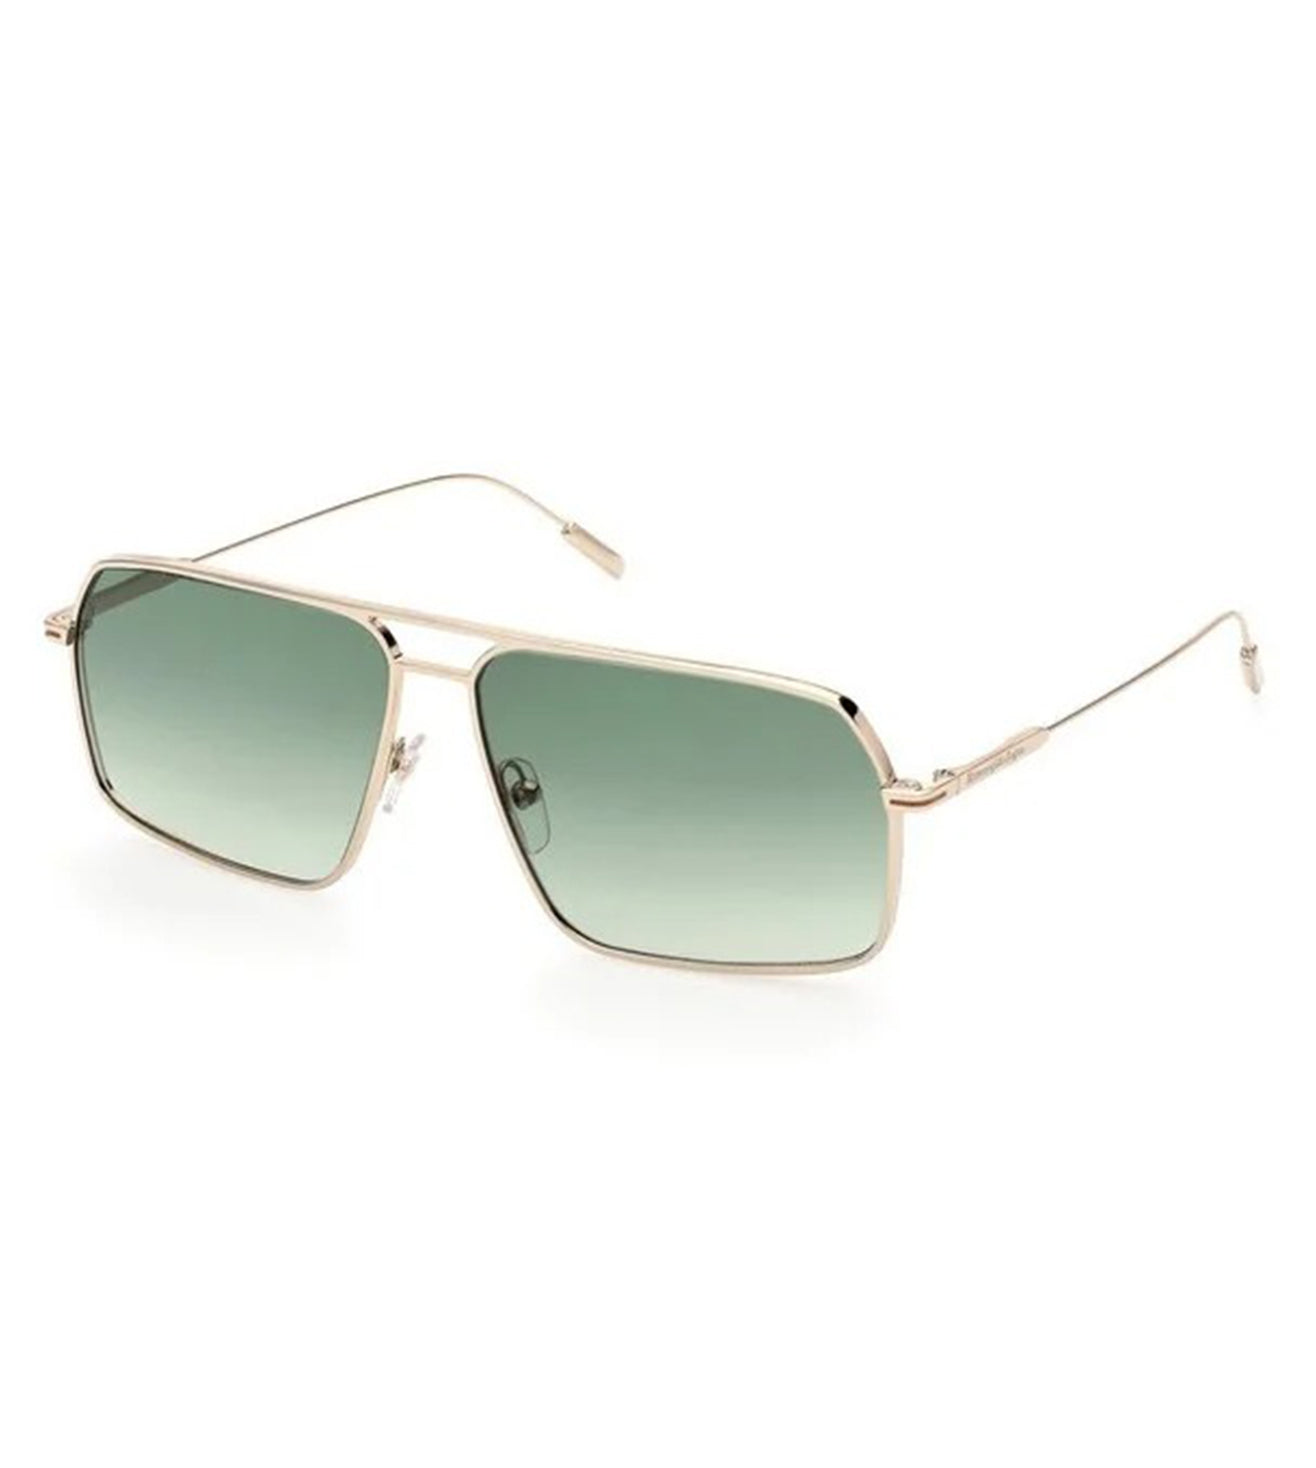 Zegna Men's Gradient Green Aviator Sunglasses